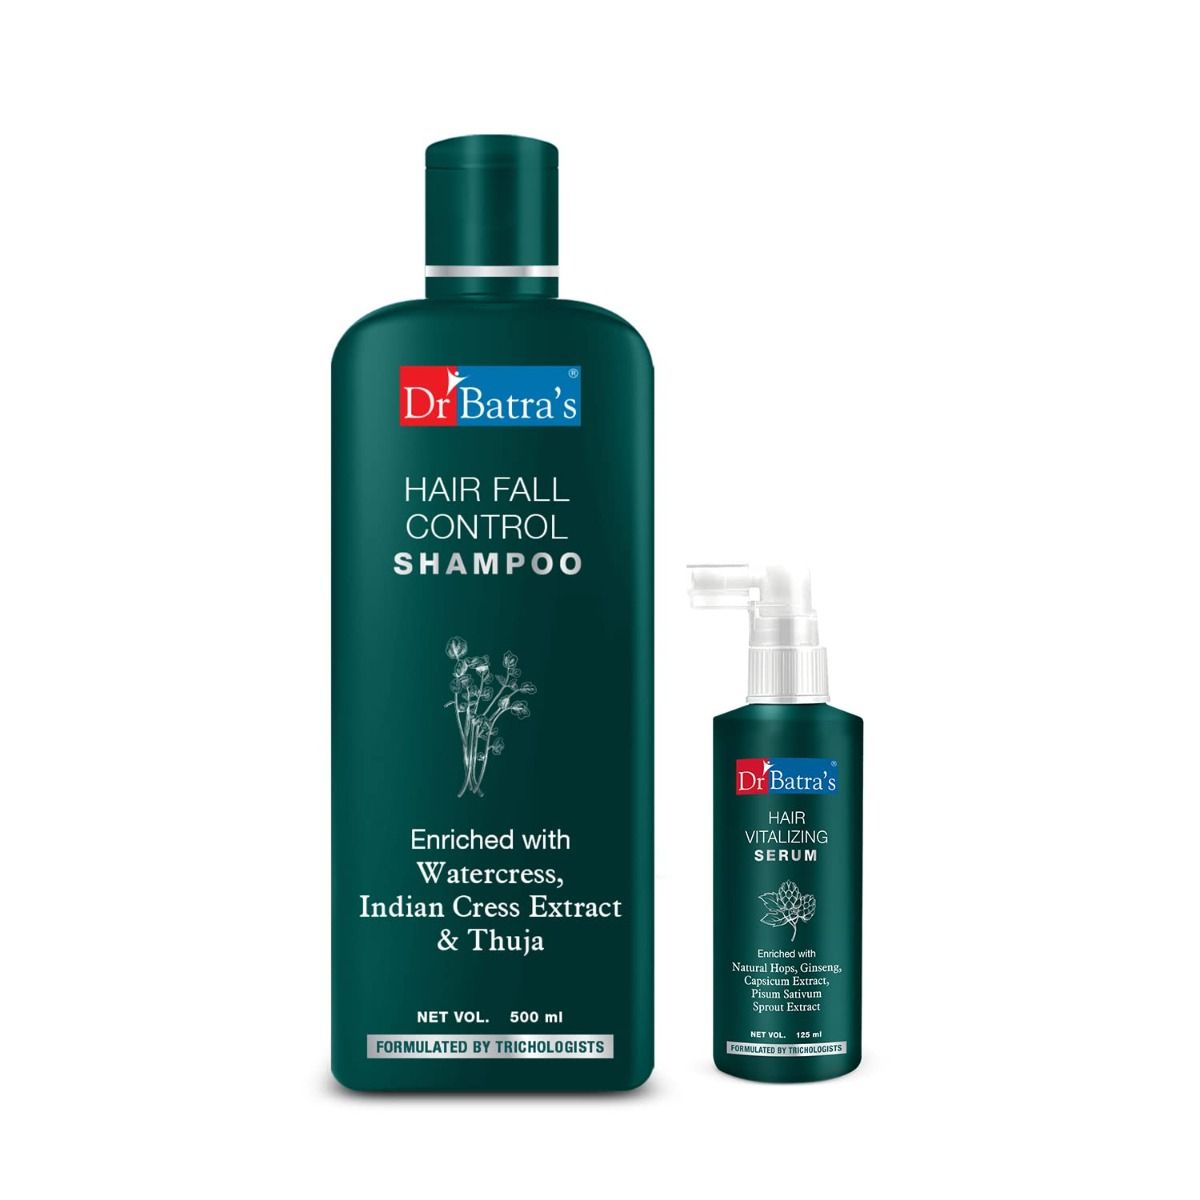     			Dr Batra's Hair Vitalizing Serum 125 ml and Hair Fall Control Shampoo - 500 ml (Pack of 2)